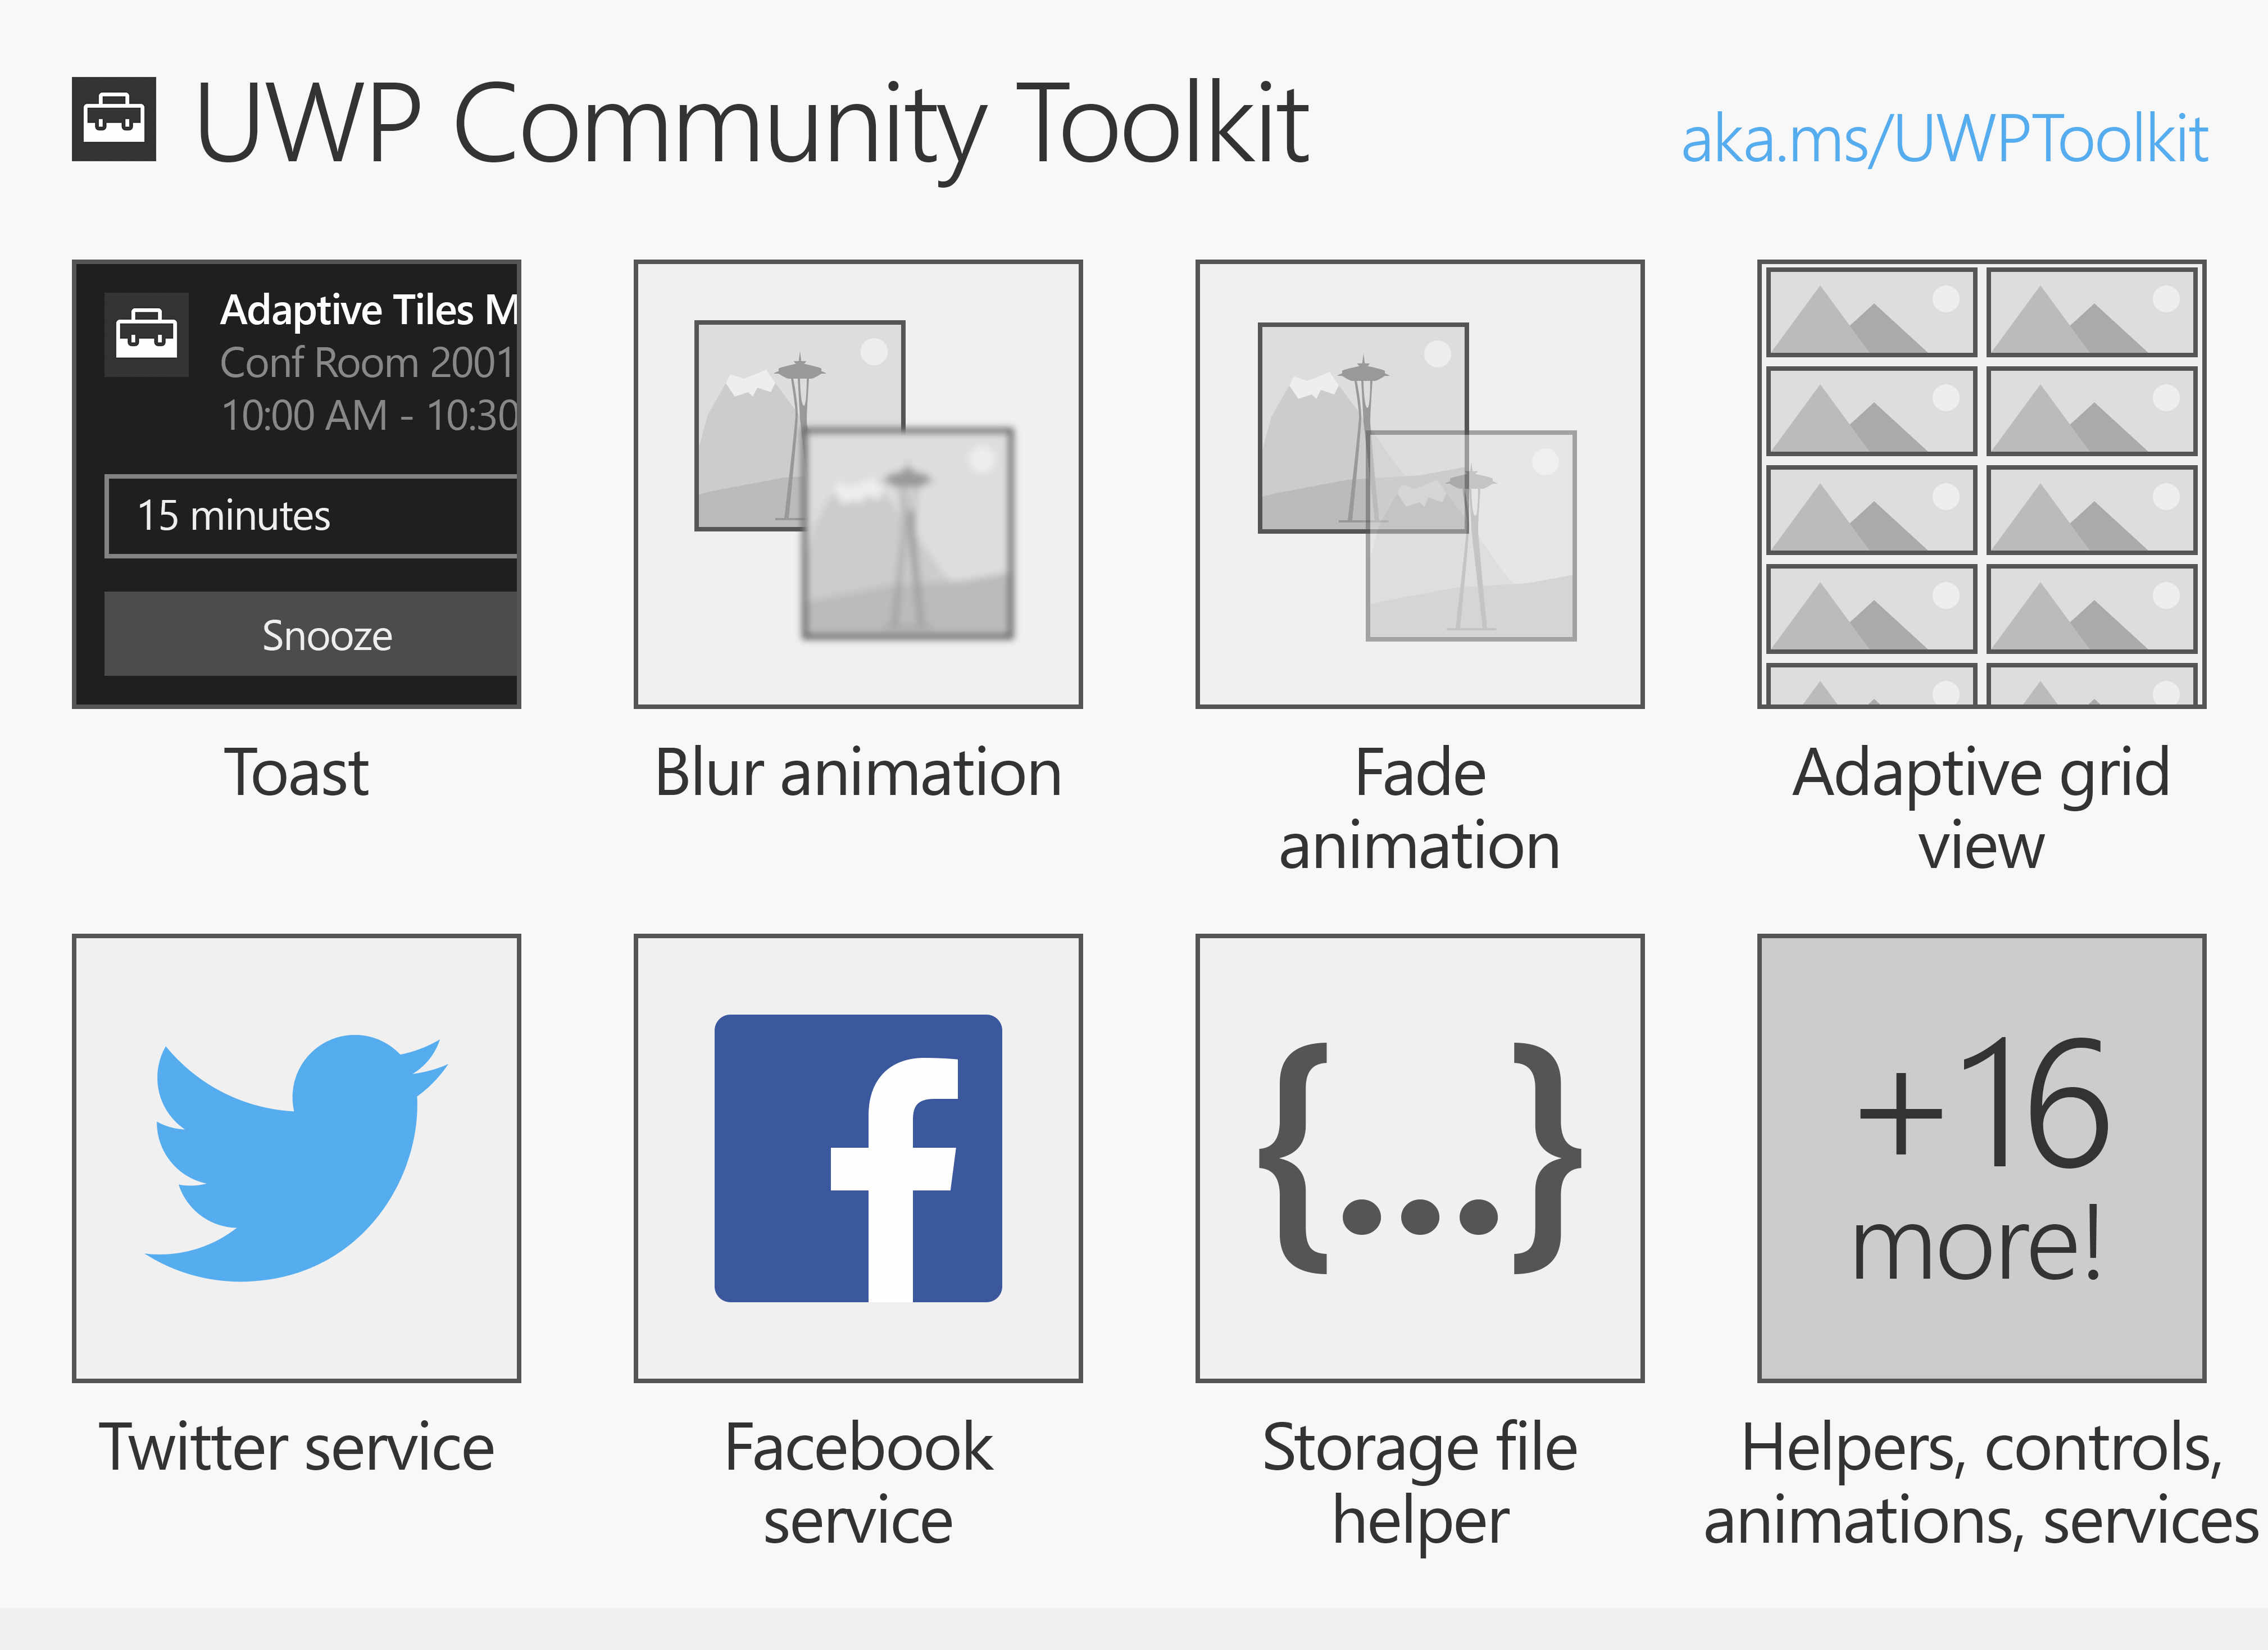 uwp community toolkit overview